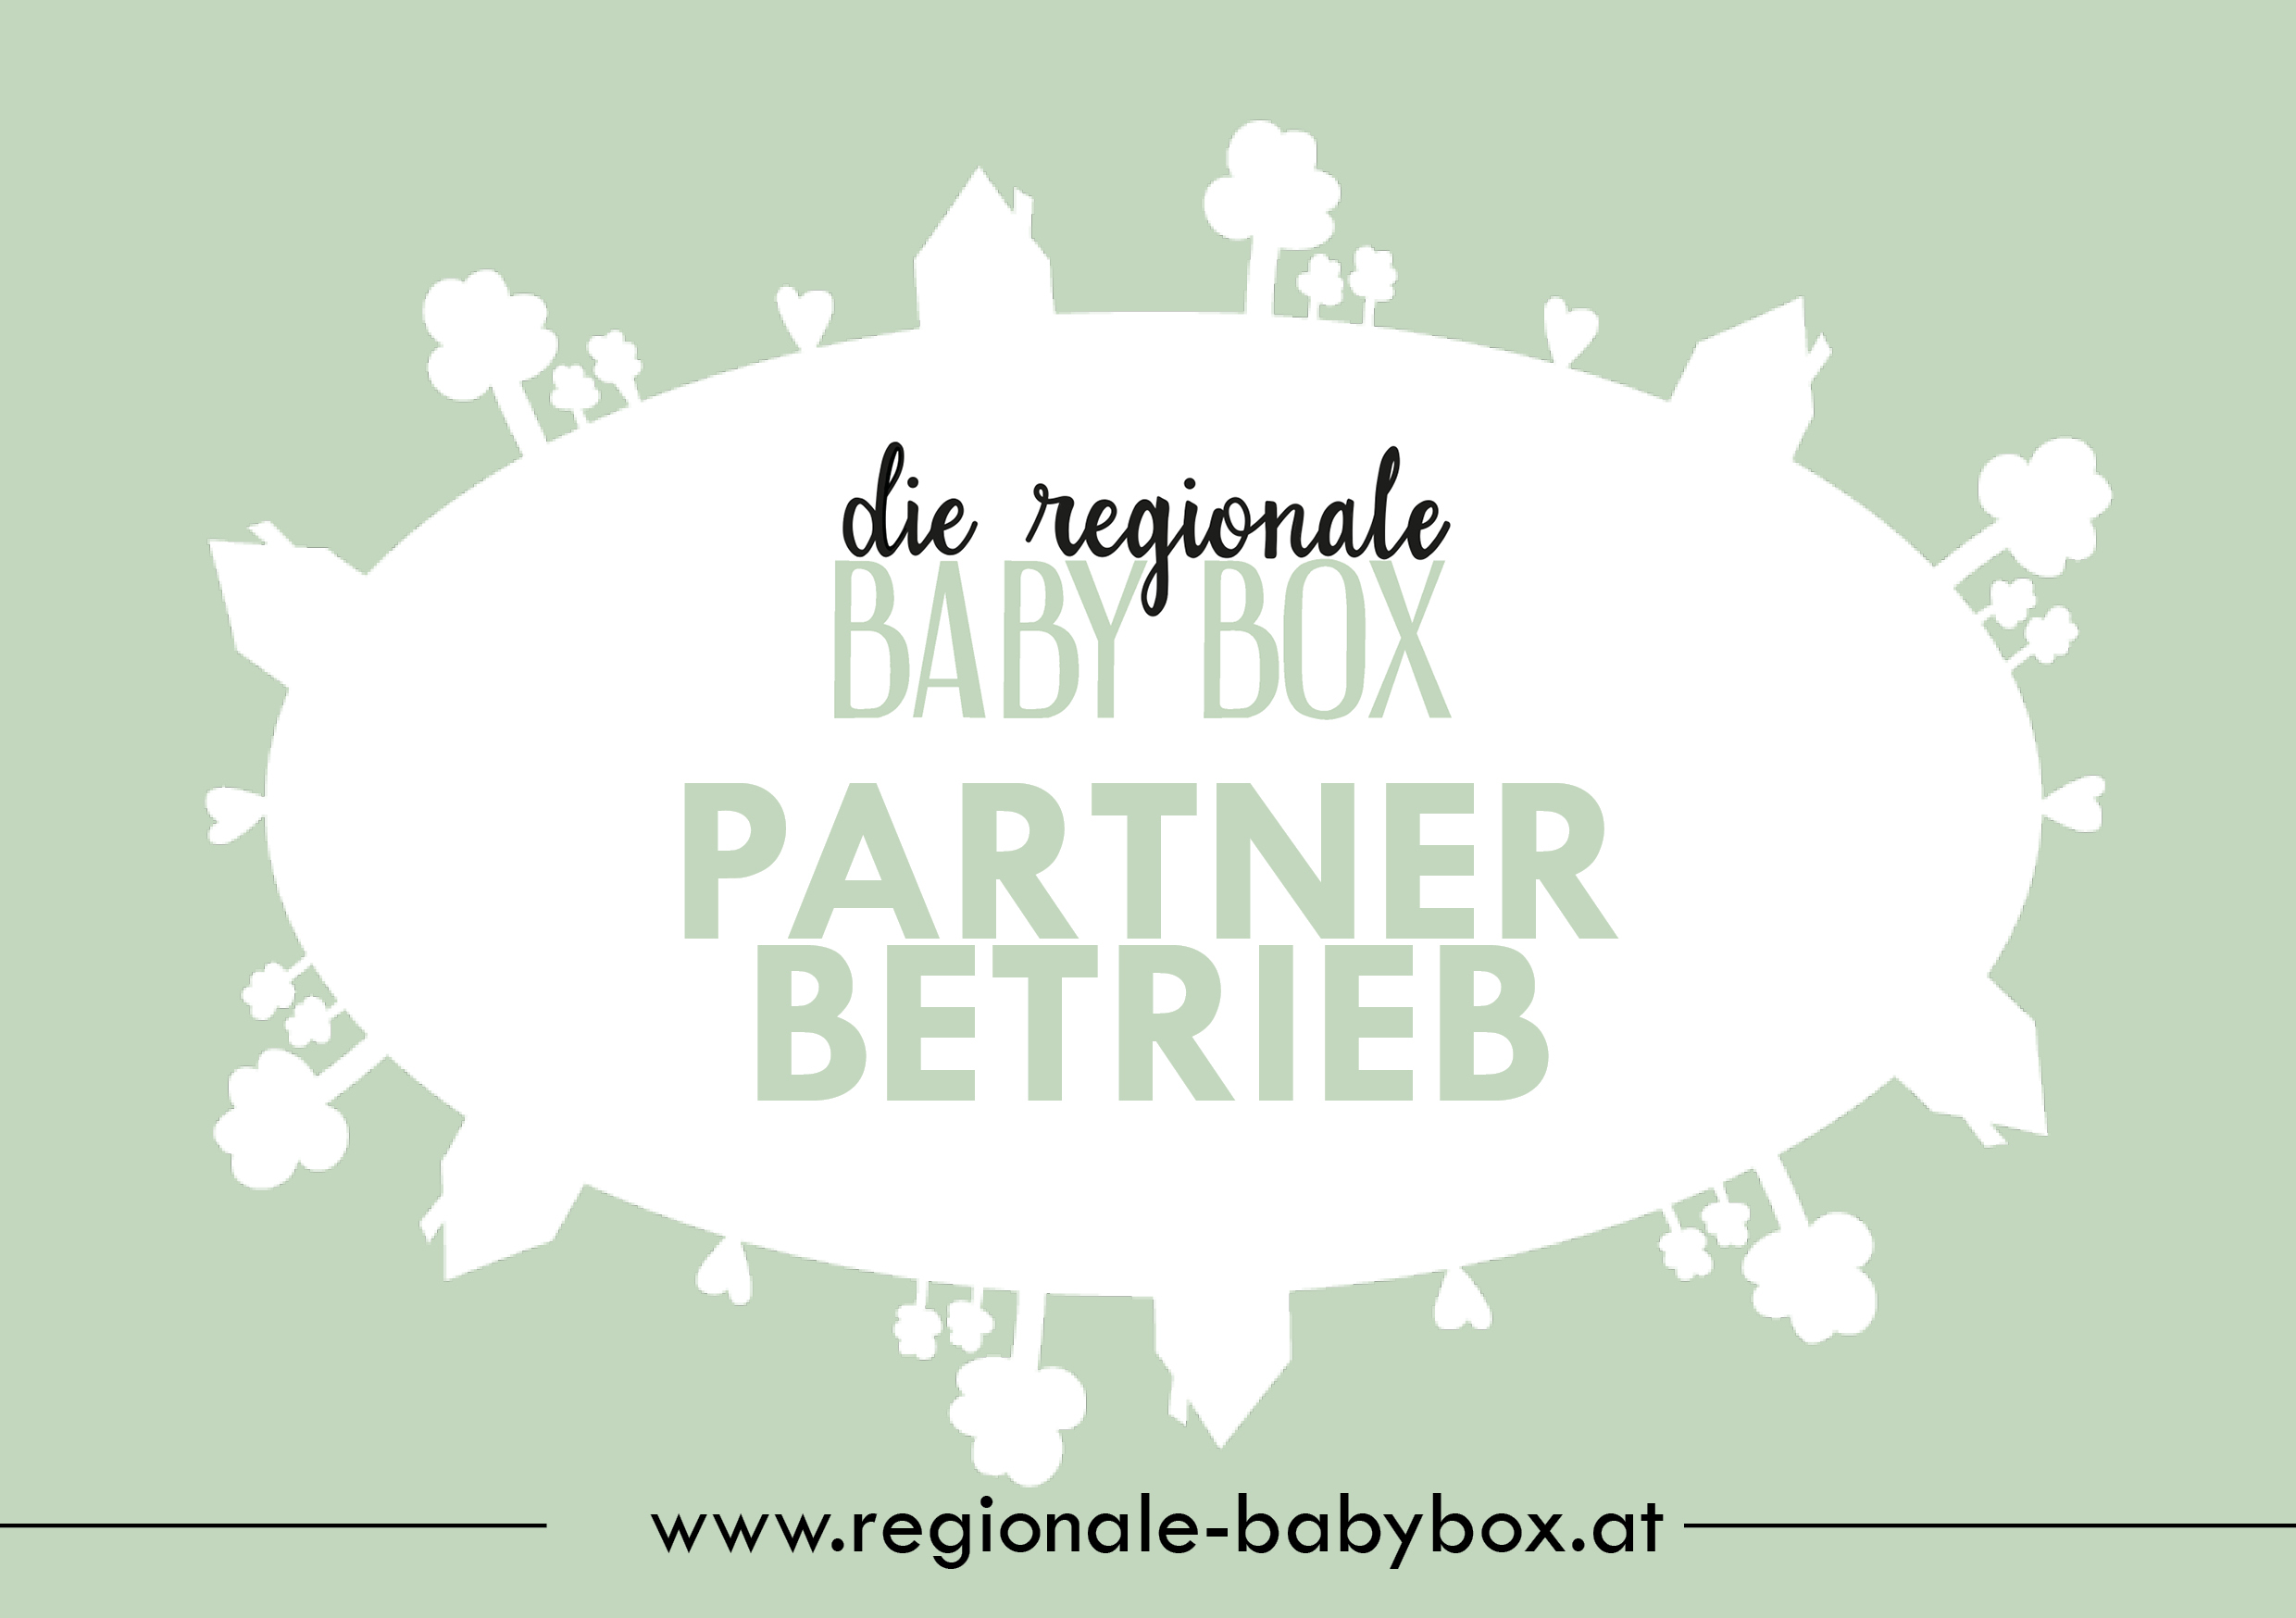 Regionale Babybox Partner Betrieb 